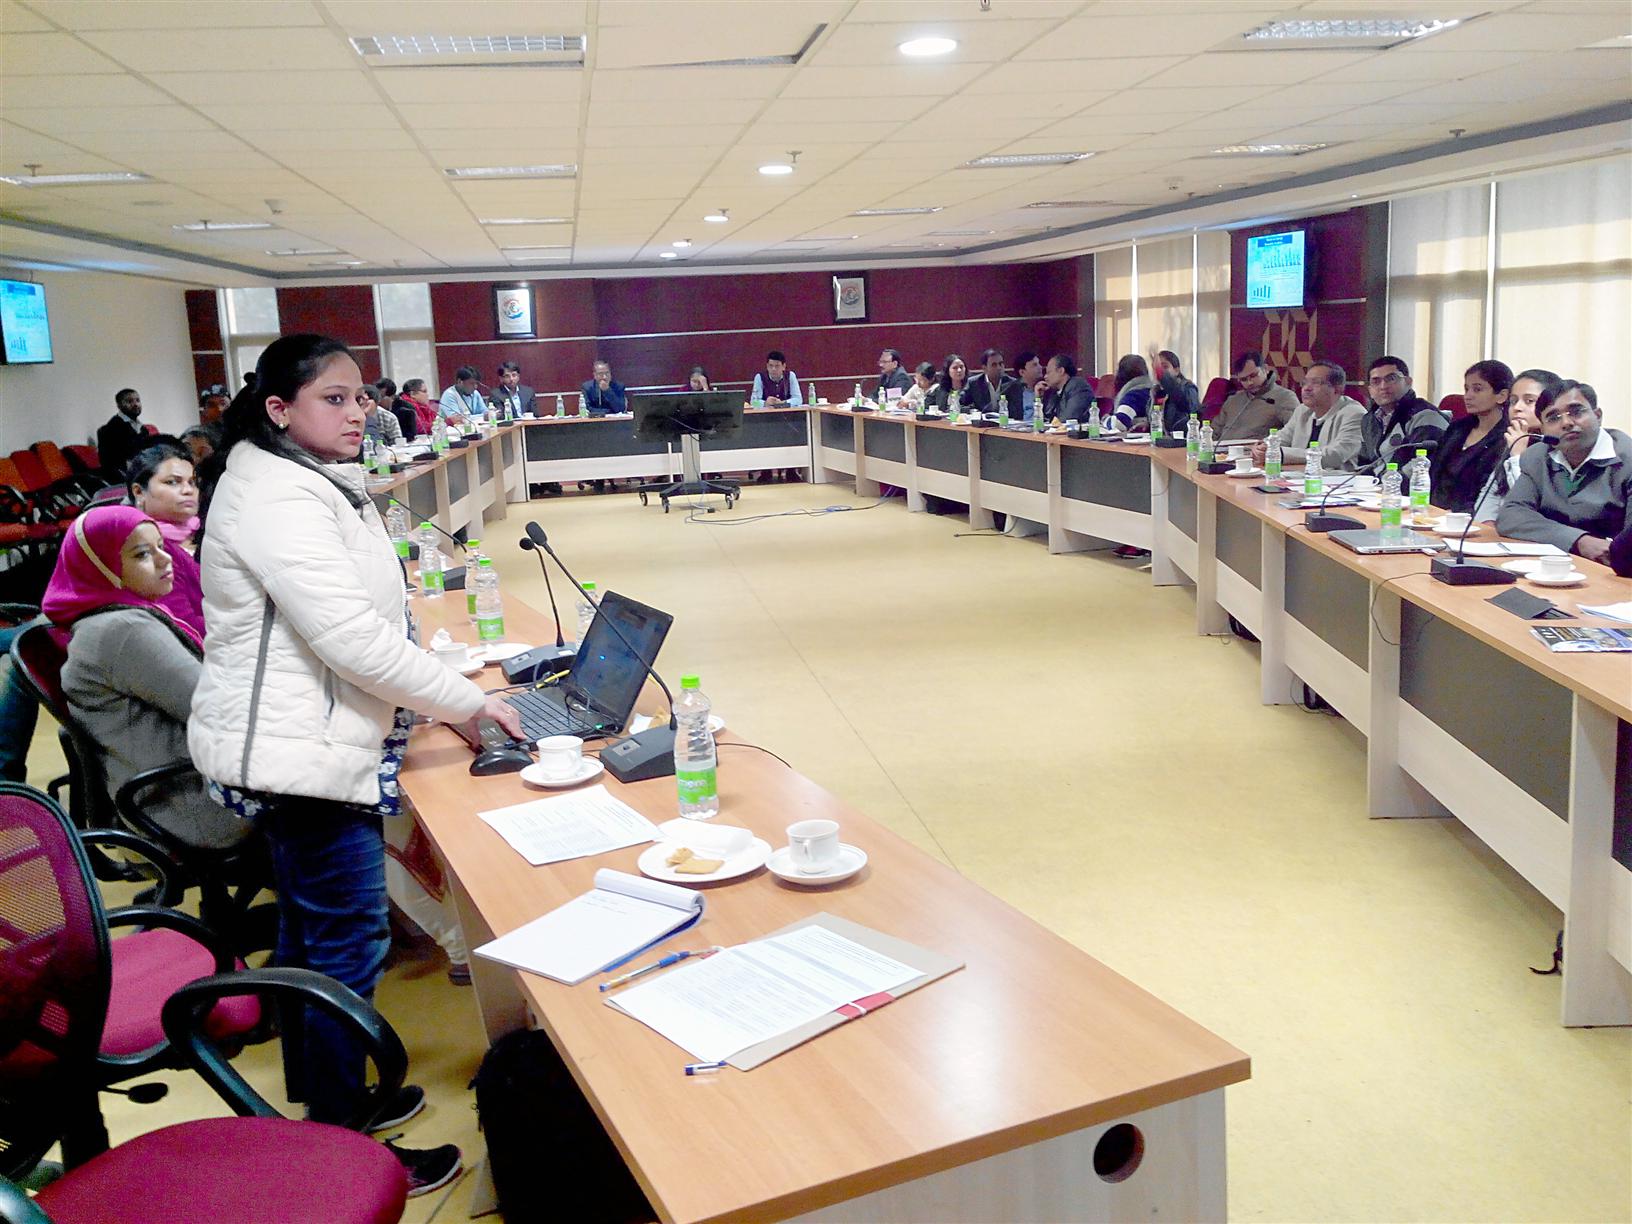 Delhi based ENVIS Centres during brain storming session